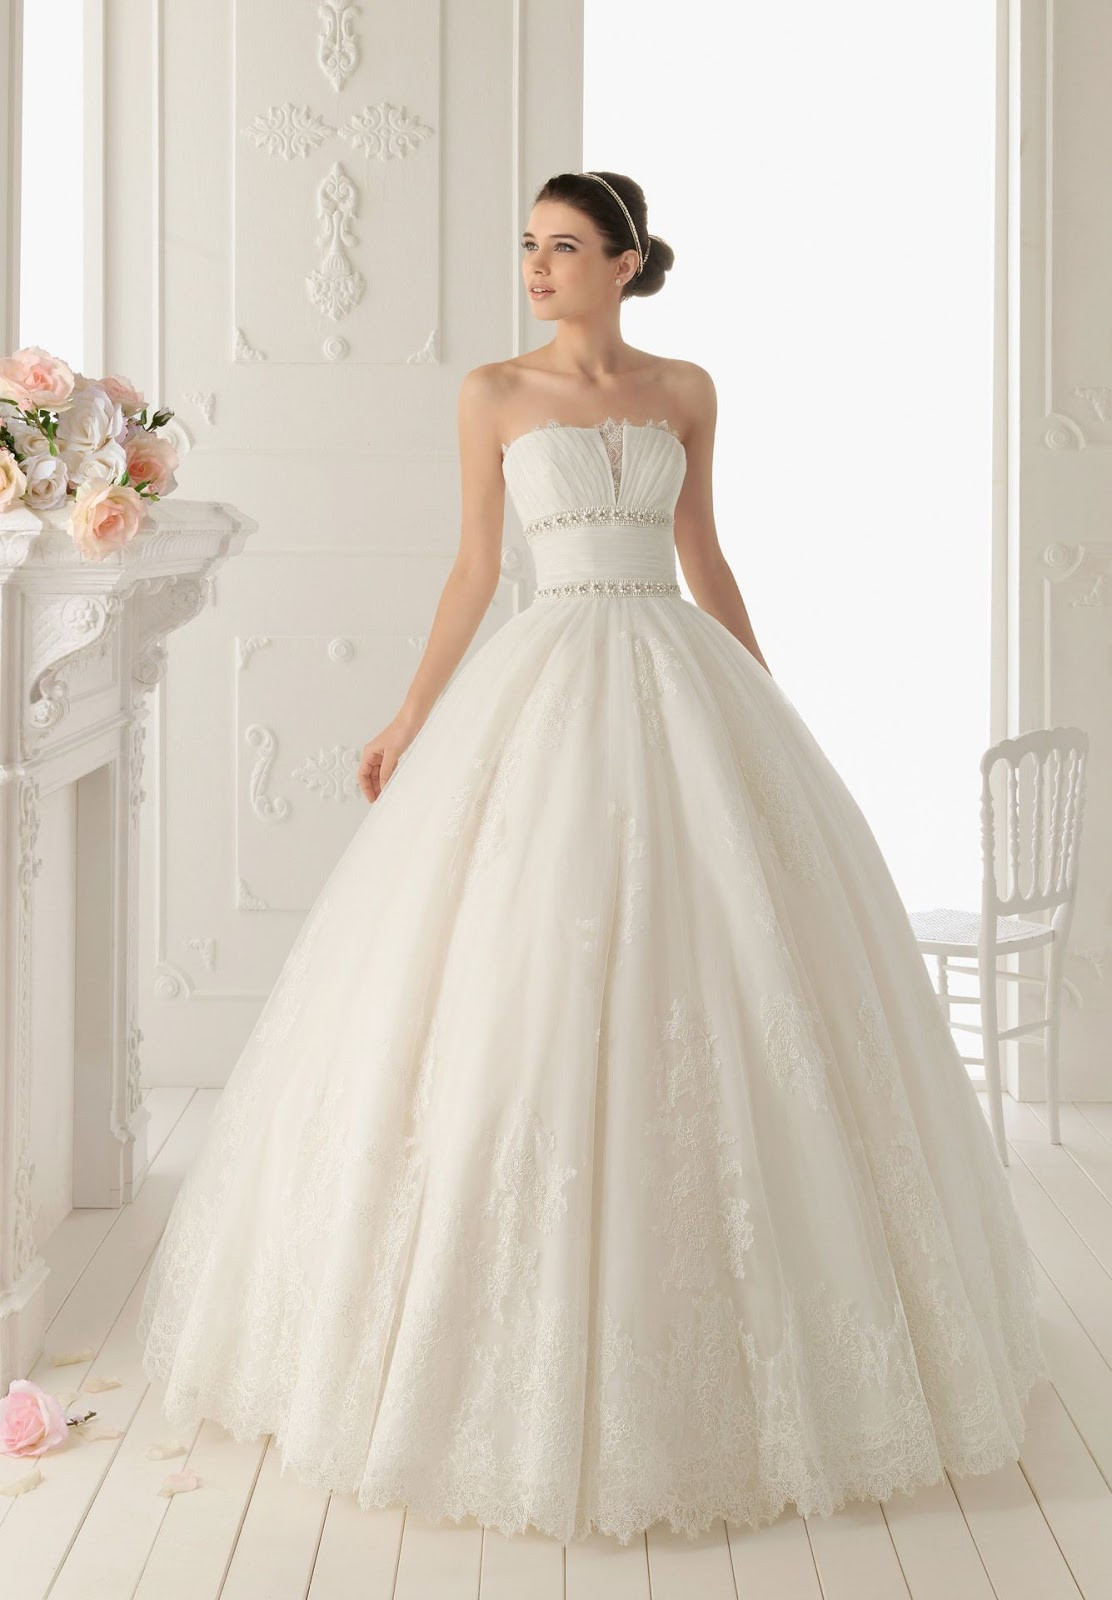 Elegant Dresses For Wedding
 WhiteAzalea Ball Gowns Lace Ball Gown Wedding Dress